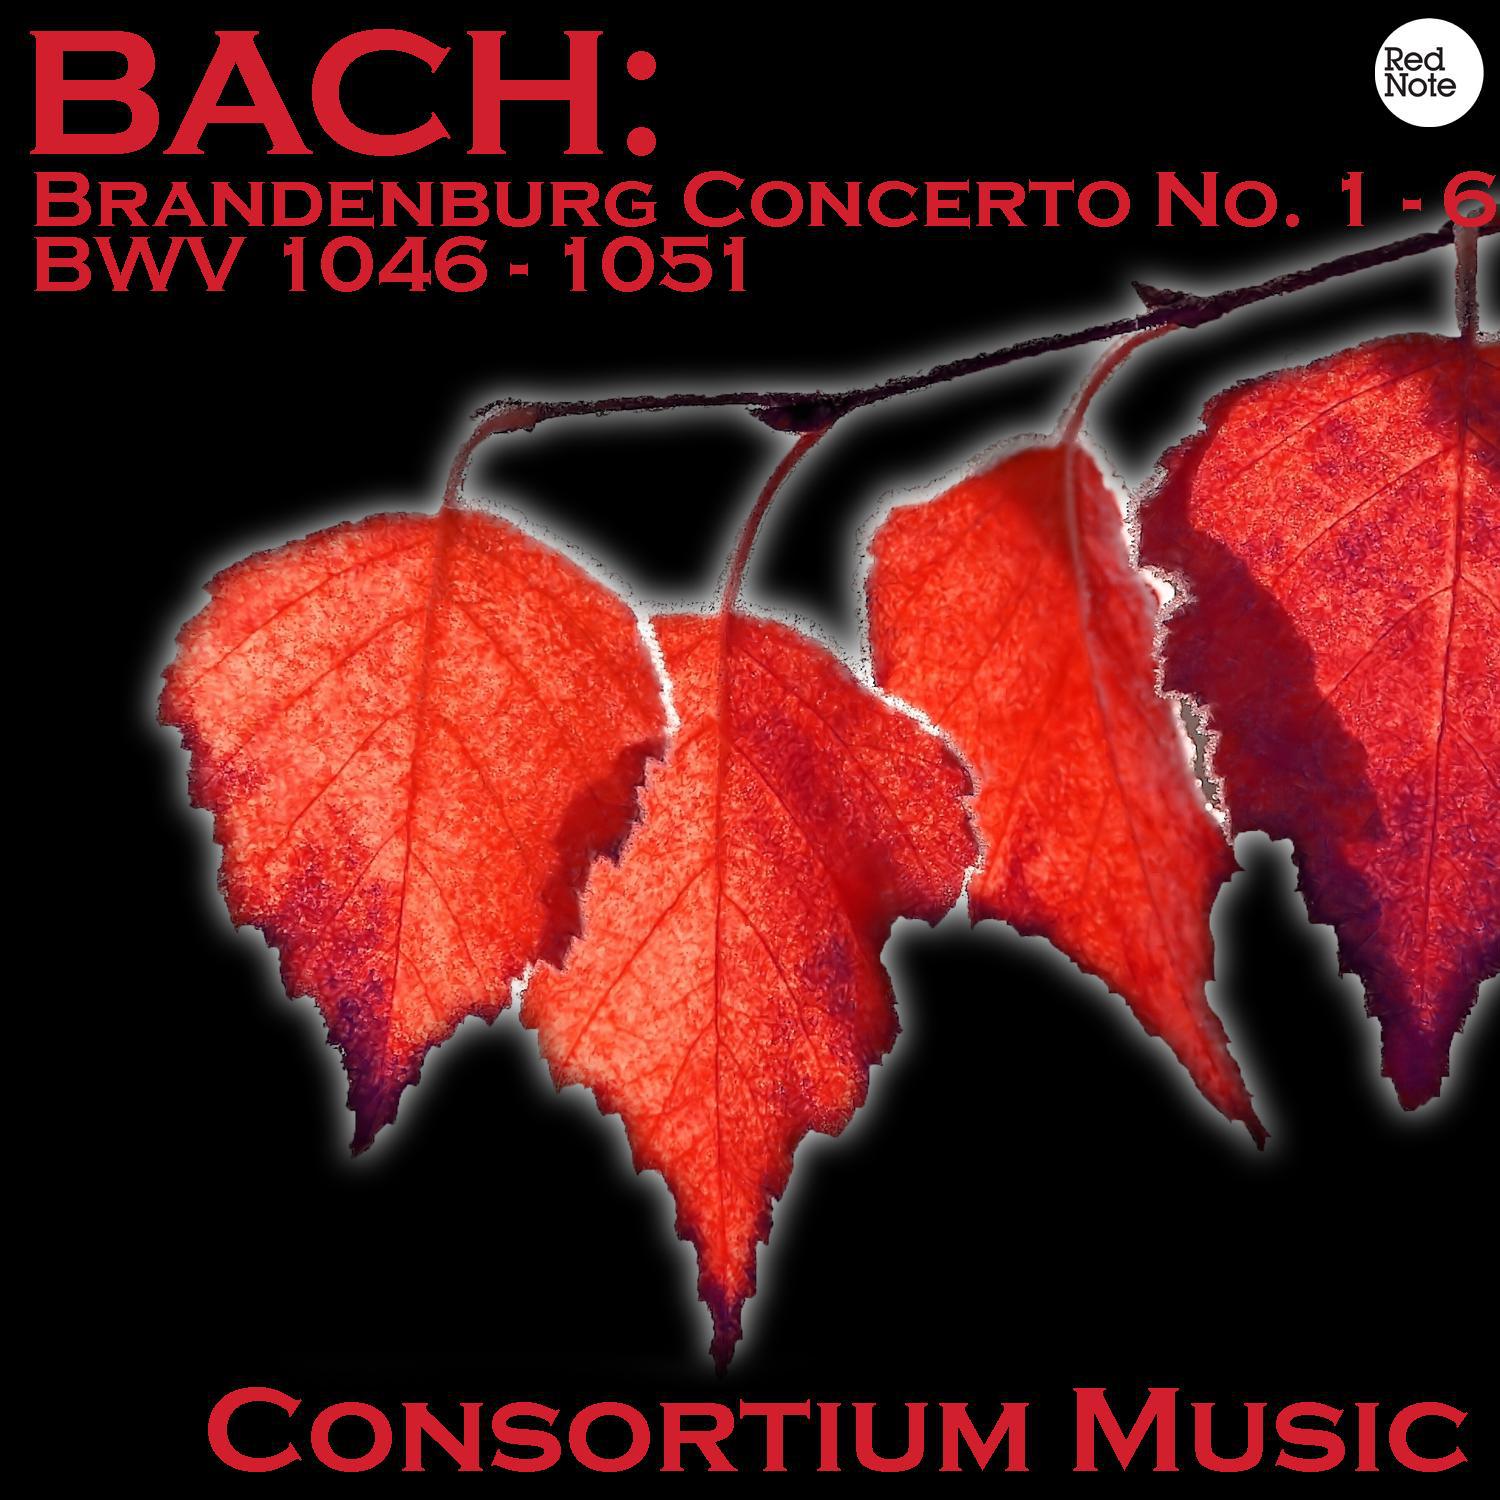 Bach: Brandenburg Concerto No. 1 - 6 BWV 1046 - 1051